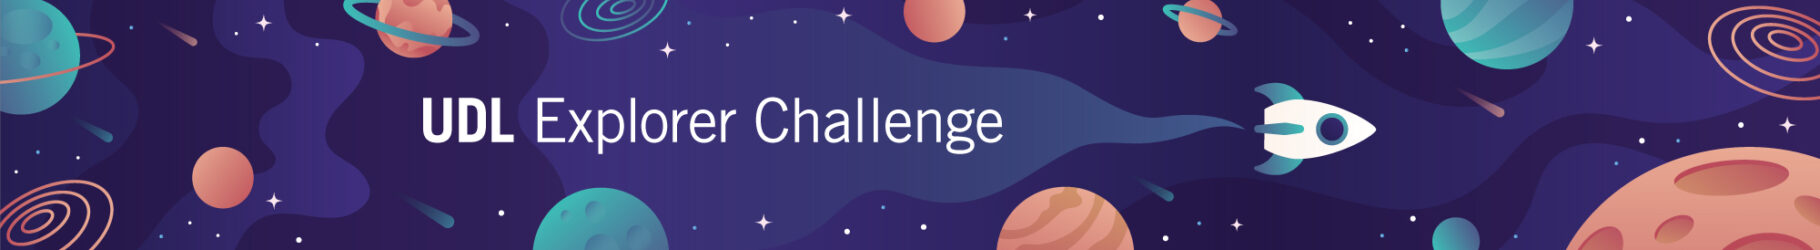 Challenge 3: Provide Multiple Media Options